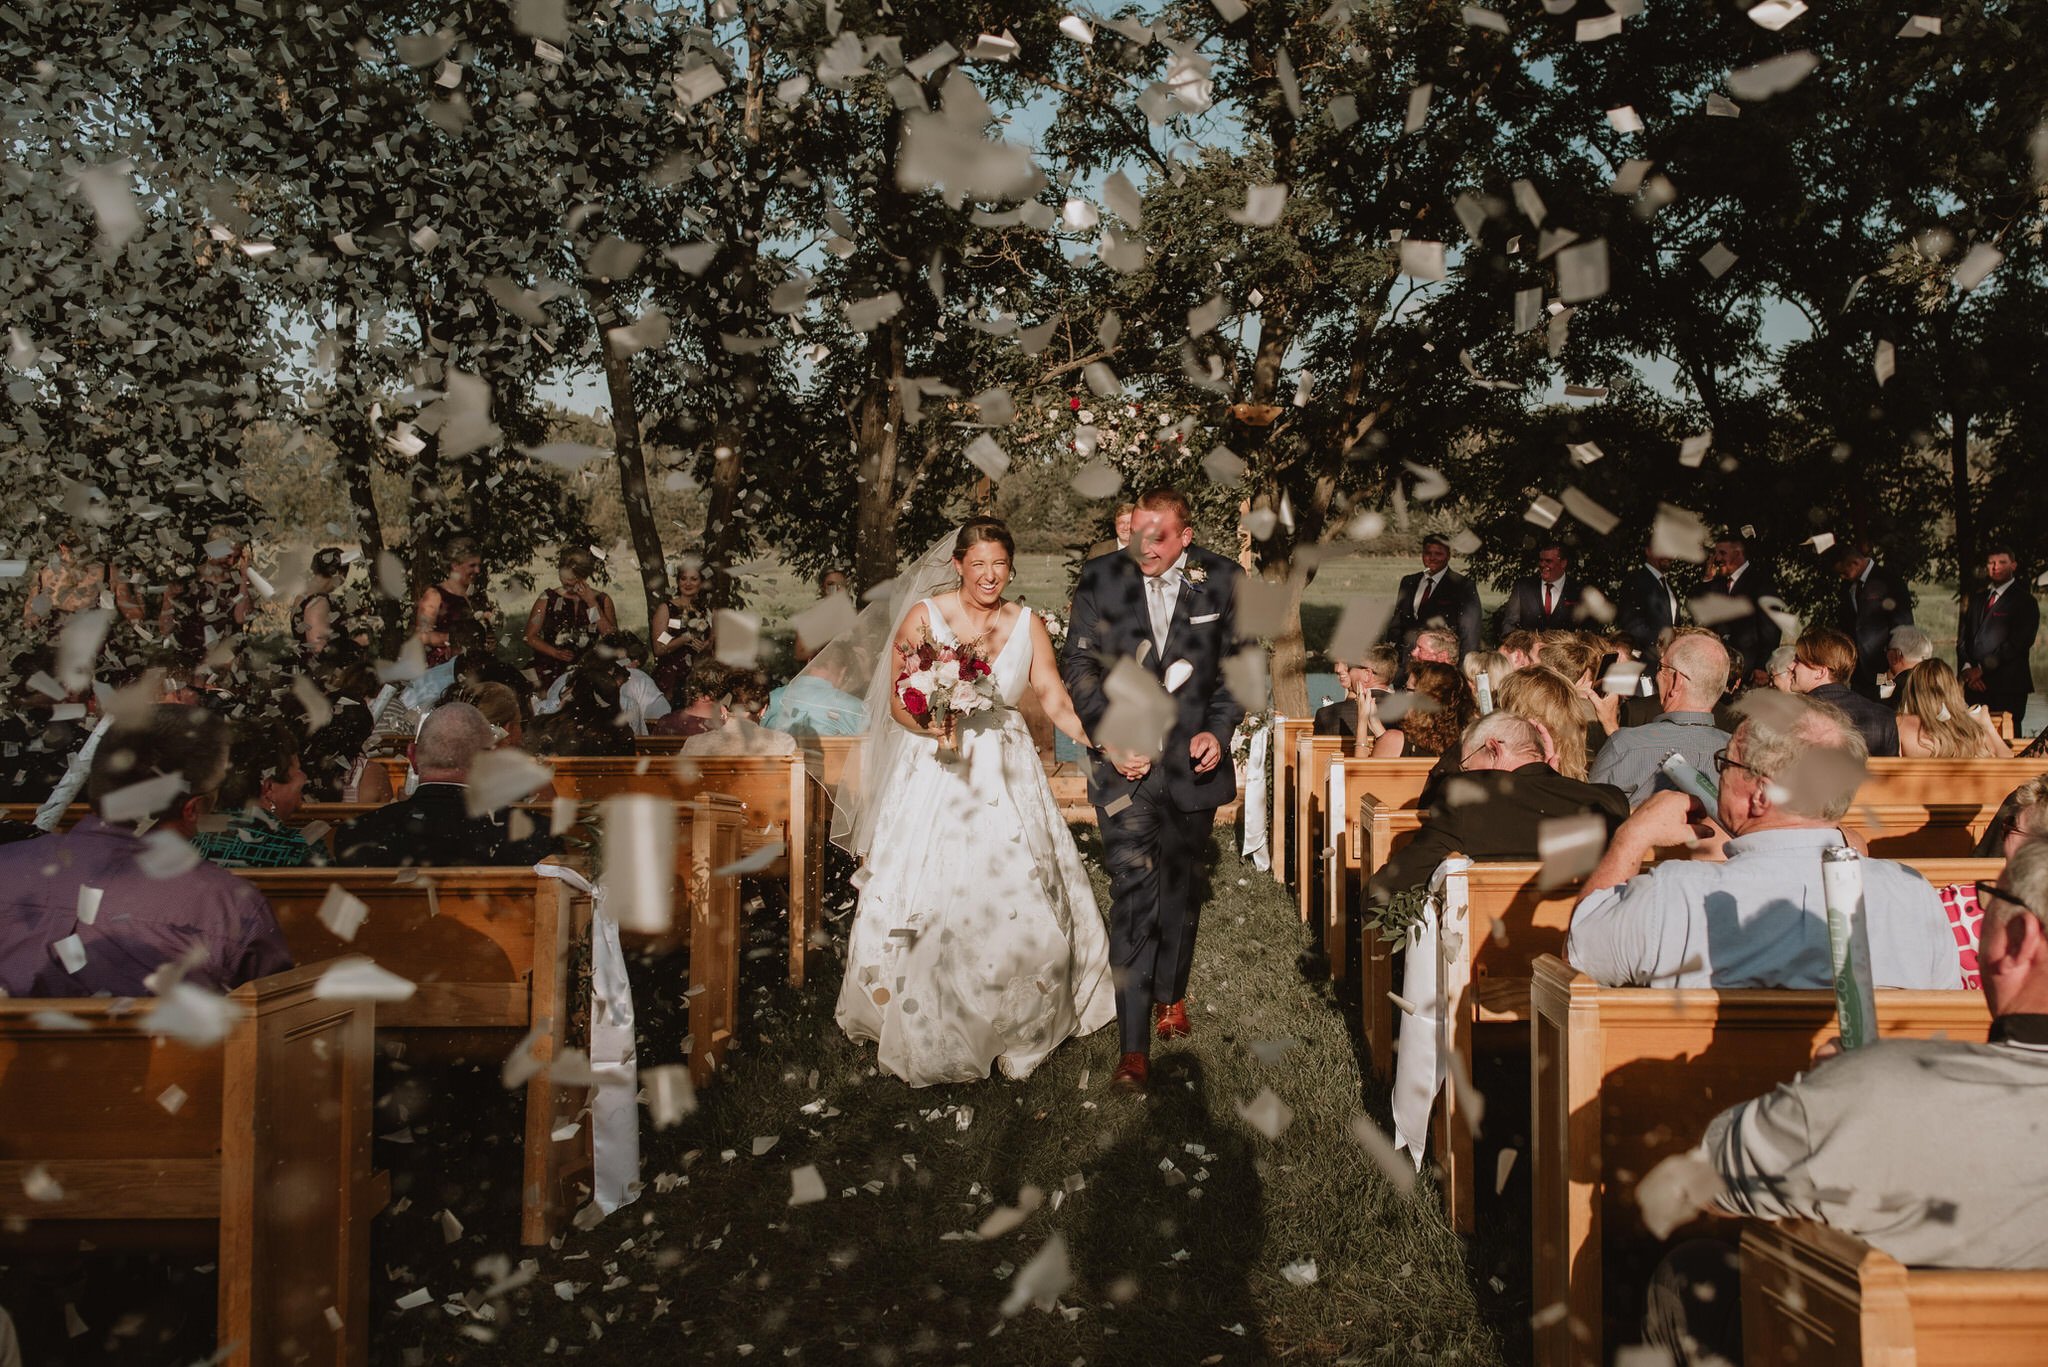 Kaylie-Sirek-Photography-Backyard-Wedding-115.jpg